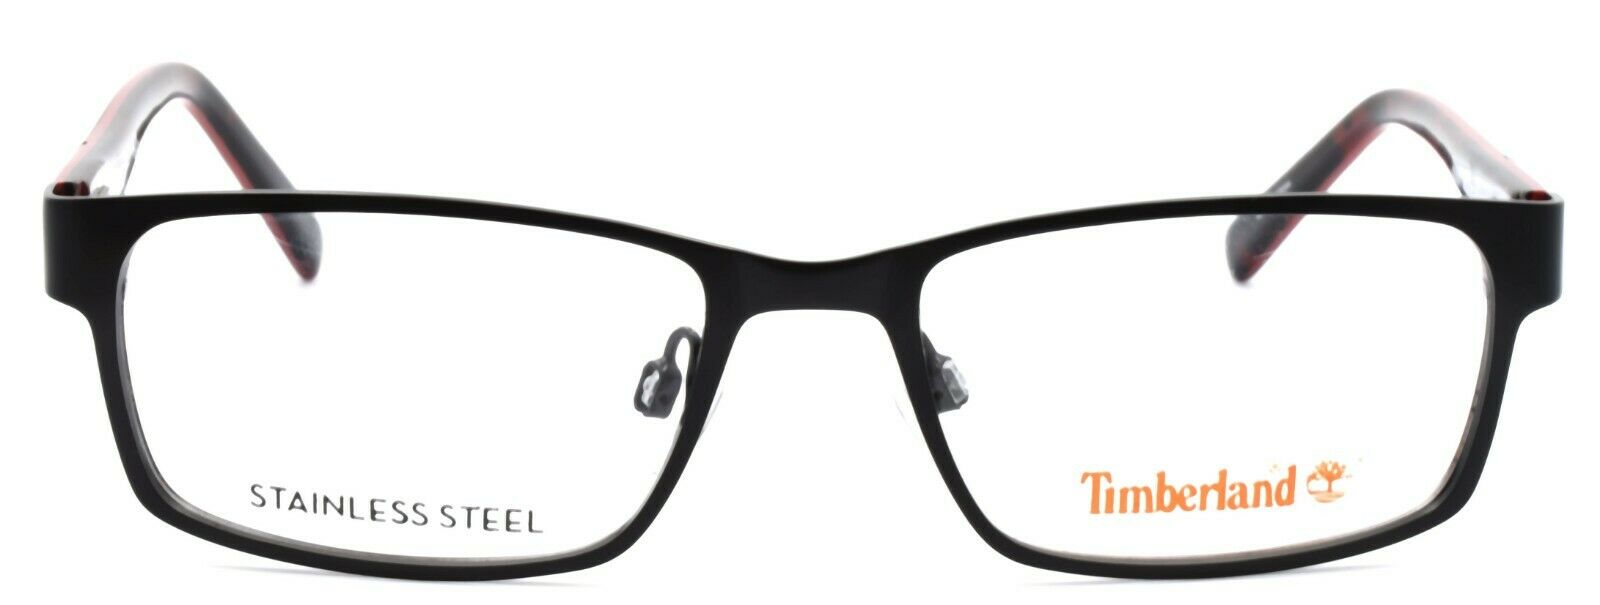 2-TIMBERLAND TB5062 002 Eyeglasses Frames 49-16-130 Matte Black + CASE-664689713080-IKSpecs